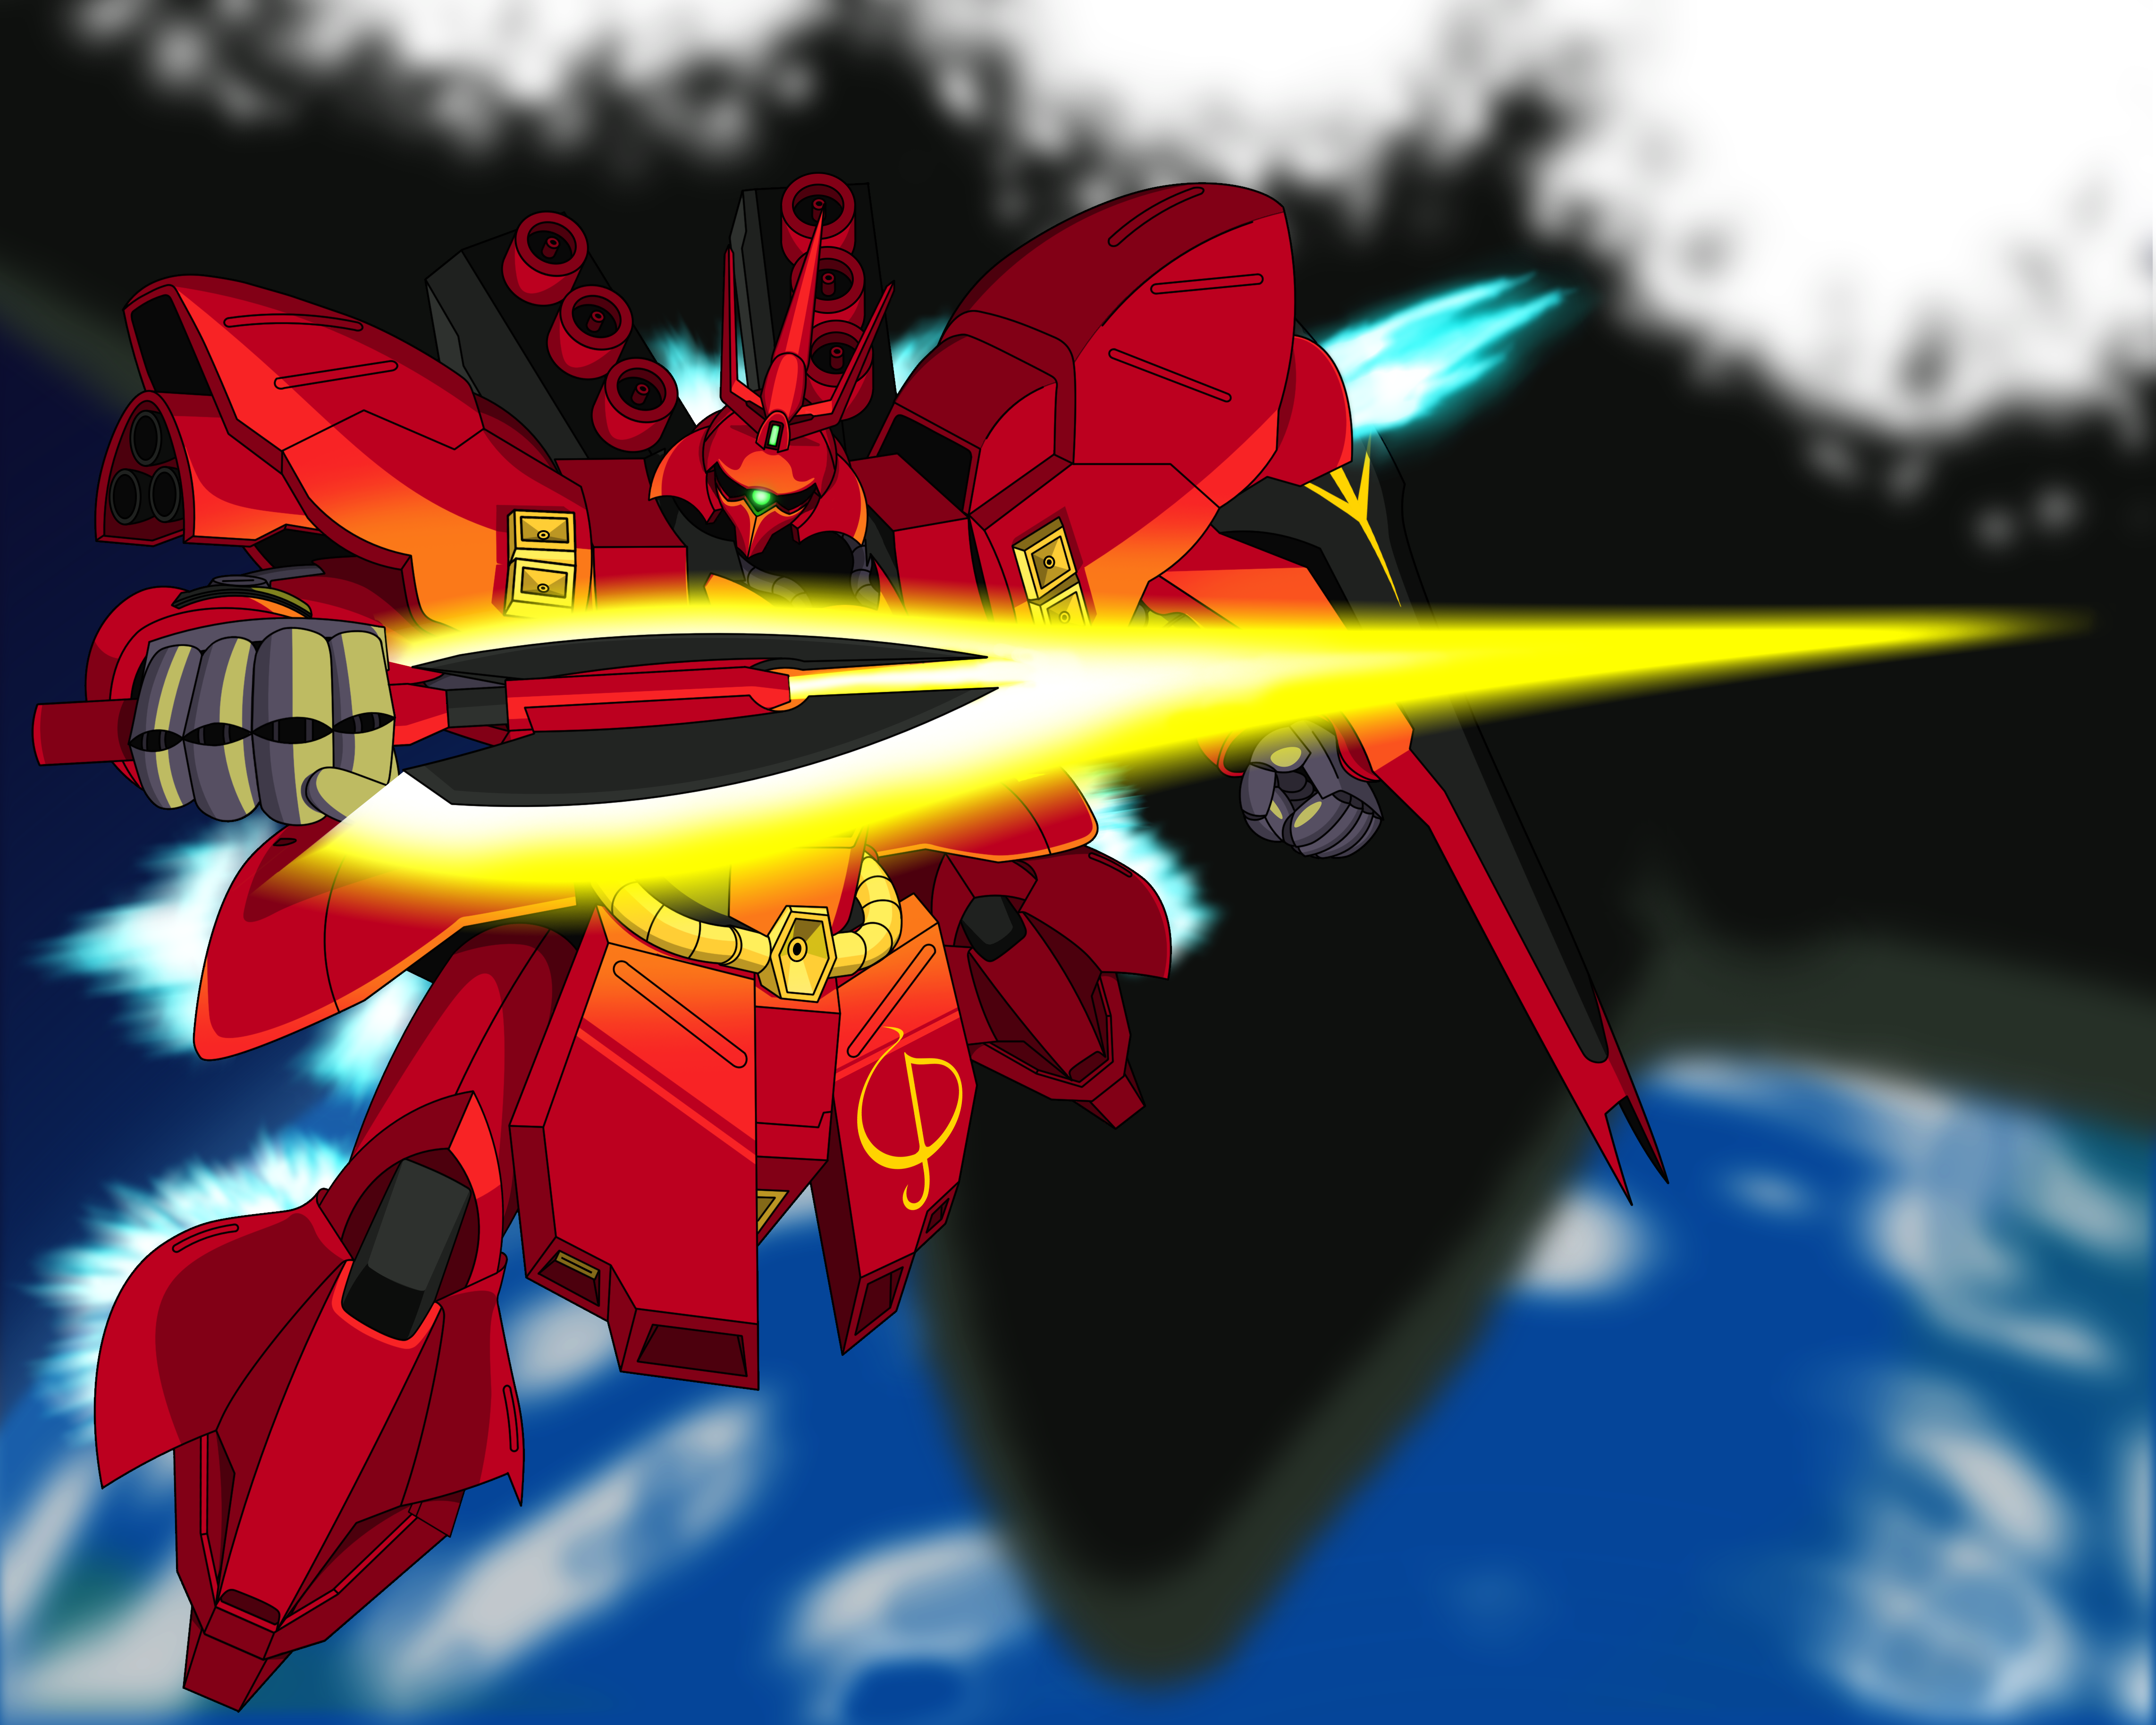 Anime 4568x3654 anime mechs Mobile Suit Gundam Char&#039;s Counterattack Sazabi Mobile Suit artwork digital art fan art Super Robot Taisen